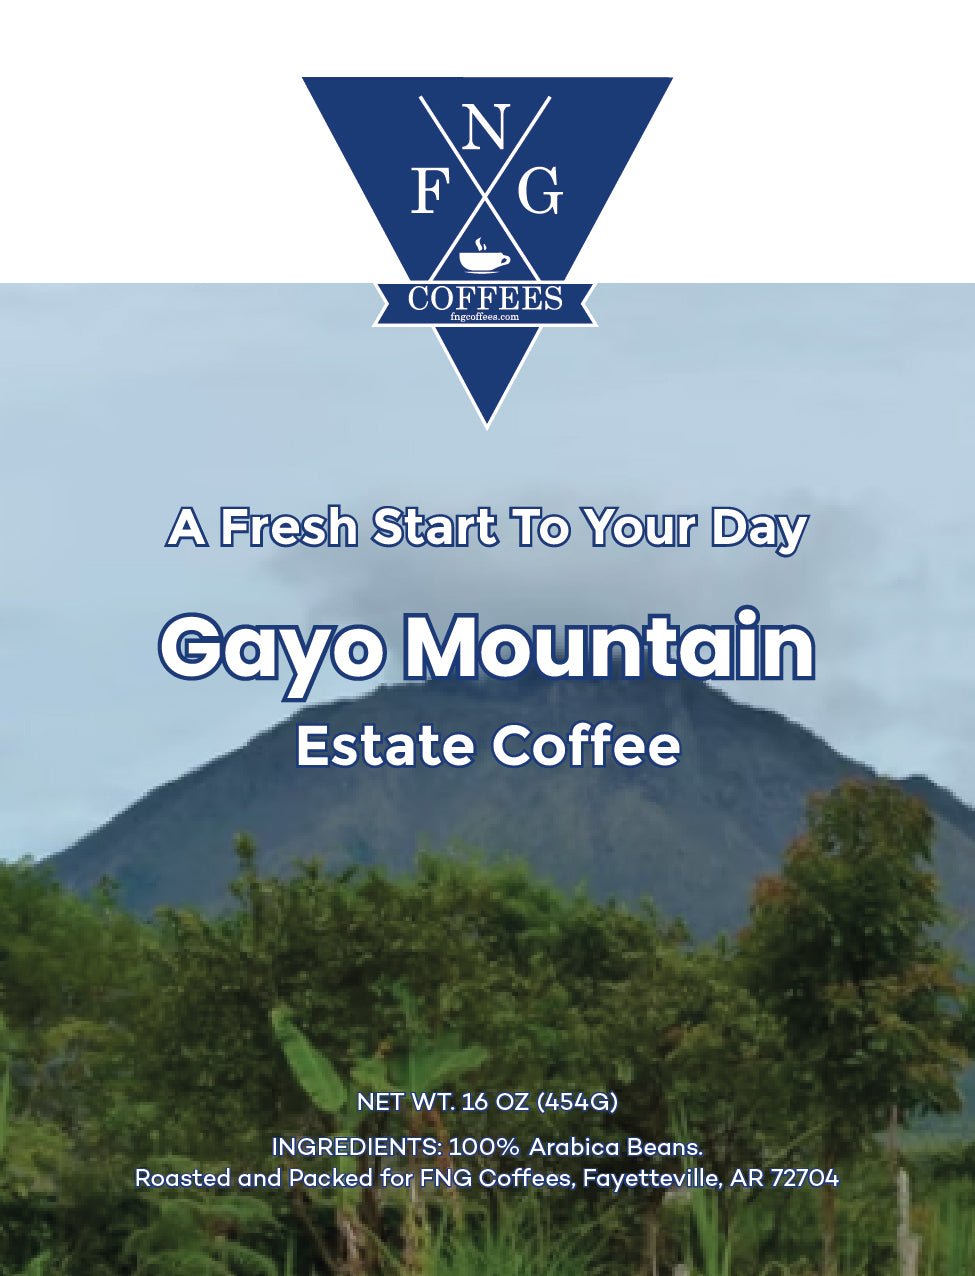 Gayo Mountain